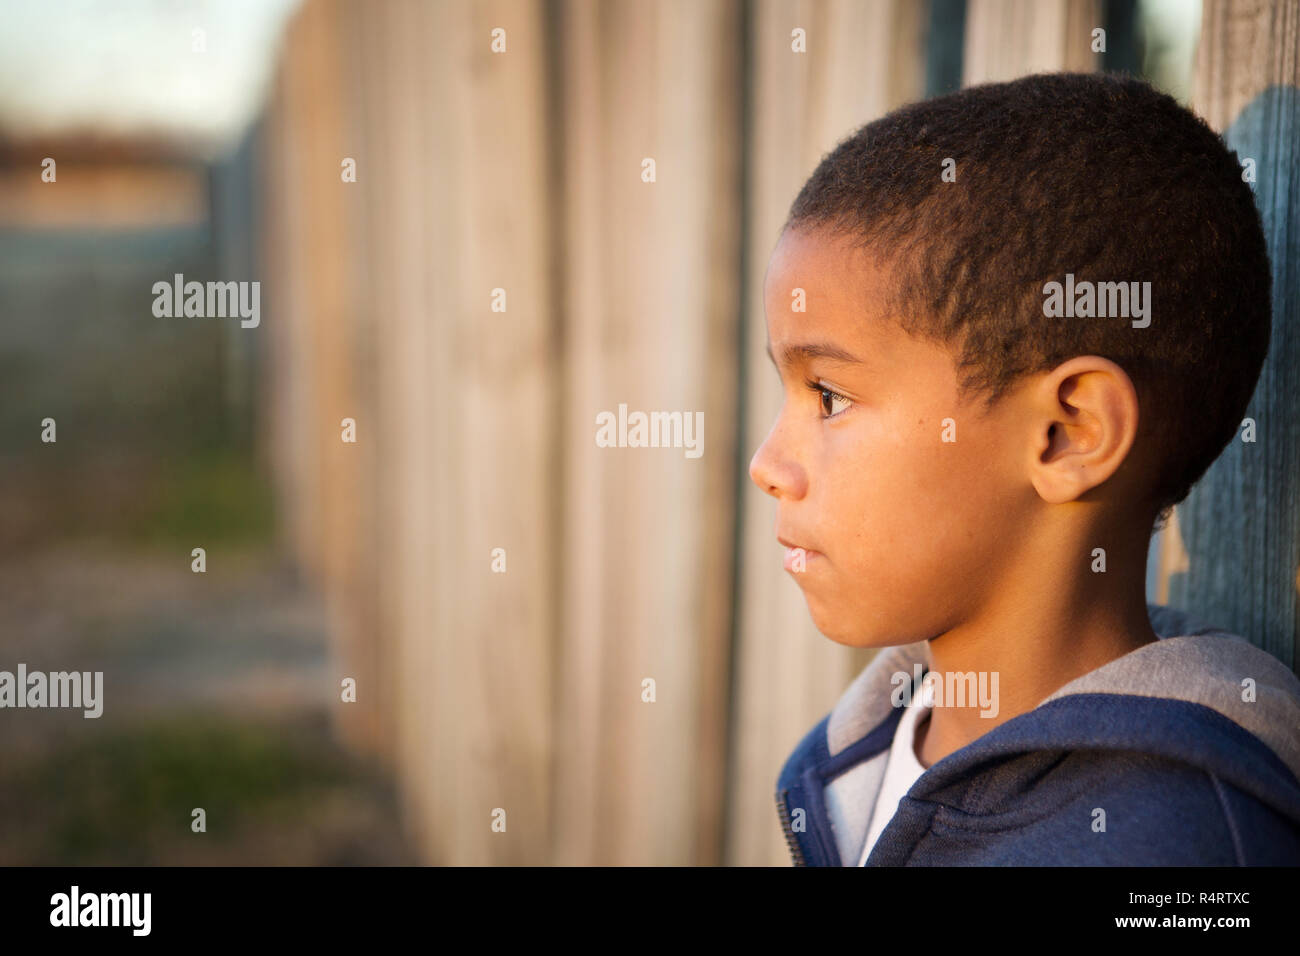 Sad little boy. Stock Photo